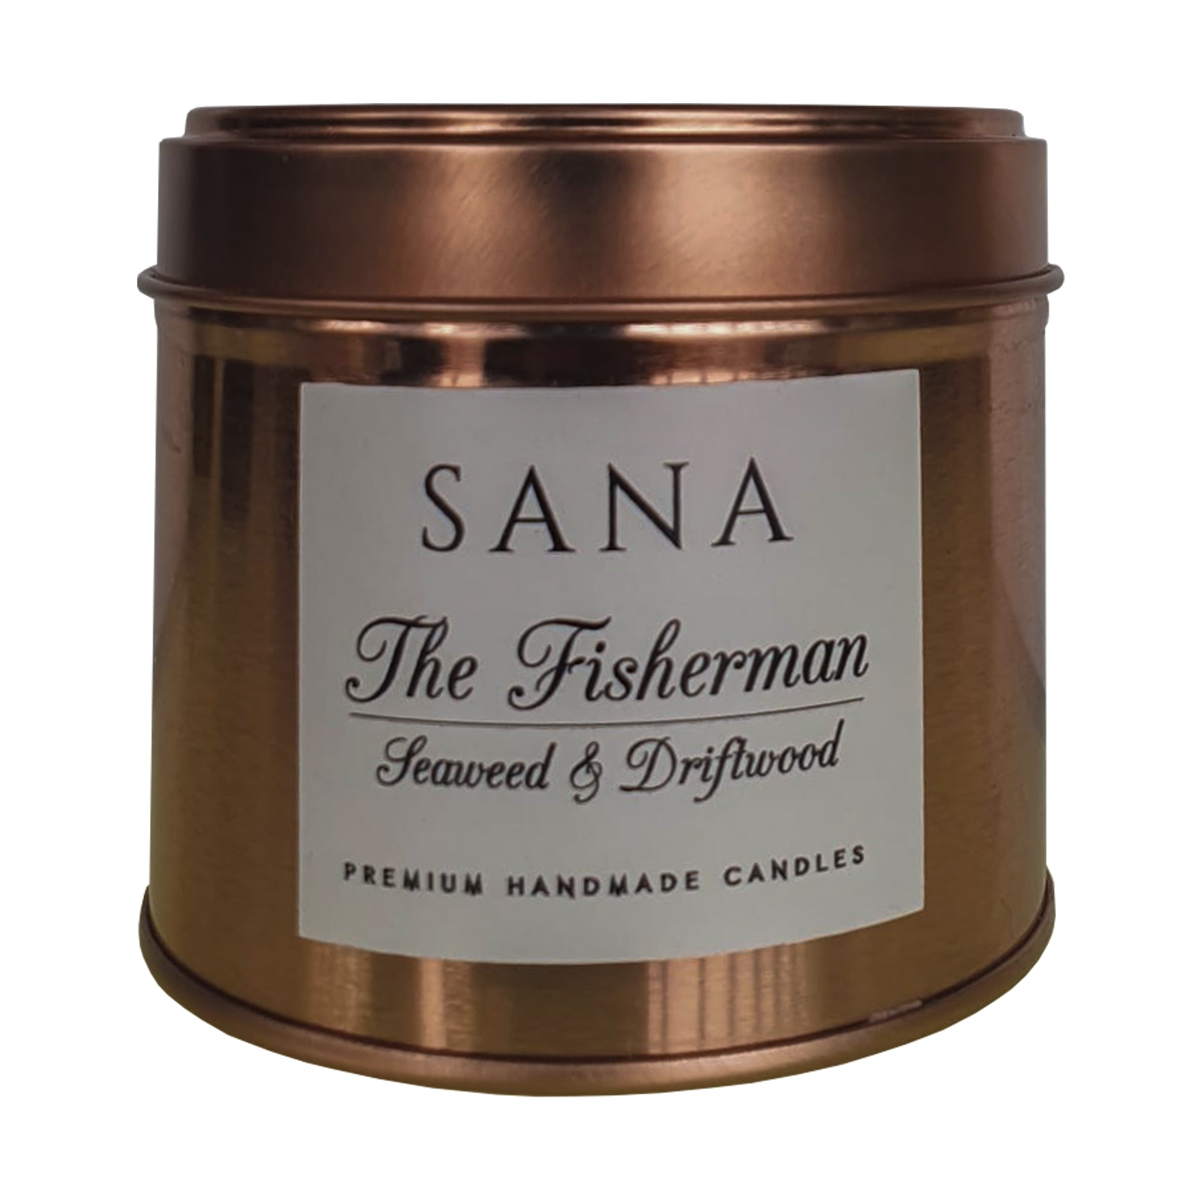 The Fisherman Sana Perfumes, Profumo Per Ambienti, Arada Perfumes